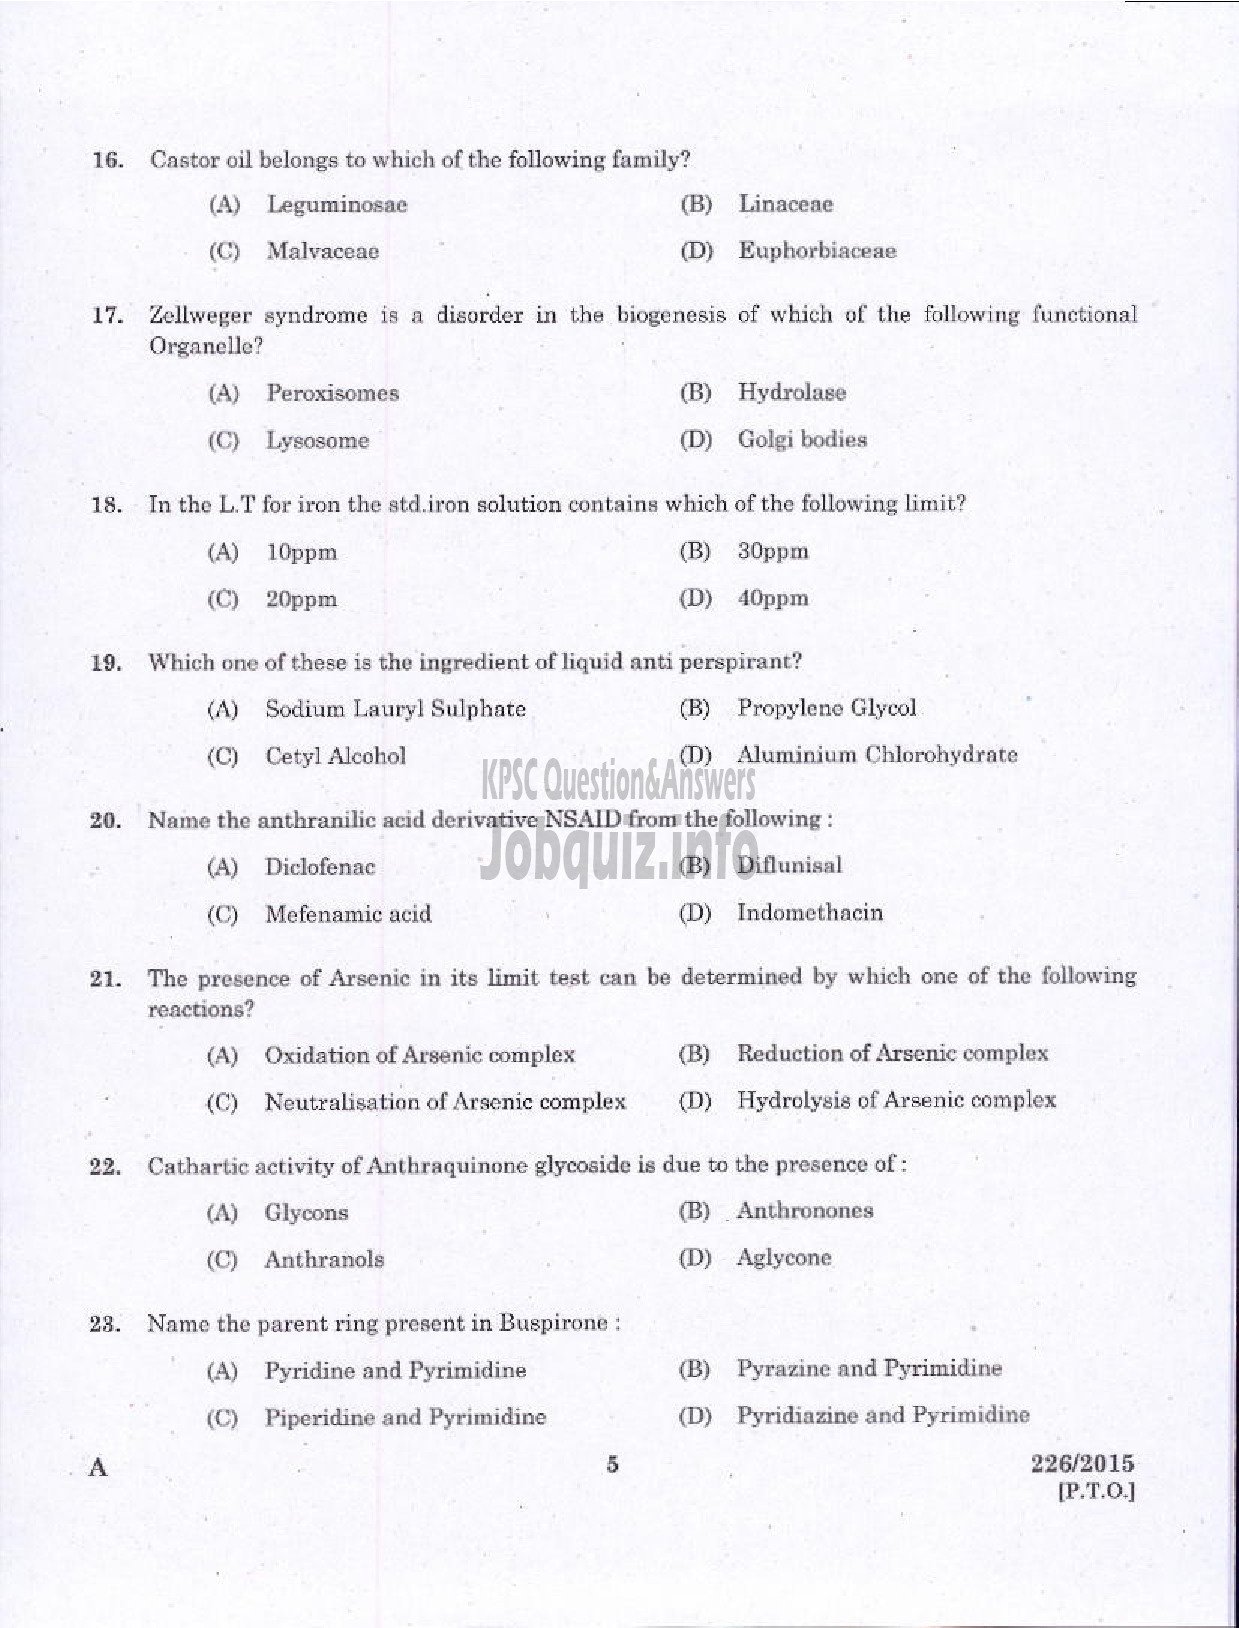 Kerala PSC Question Paper - CHEMIST GR II HEALTH SERVICES-3